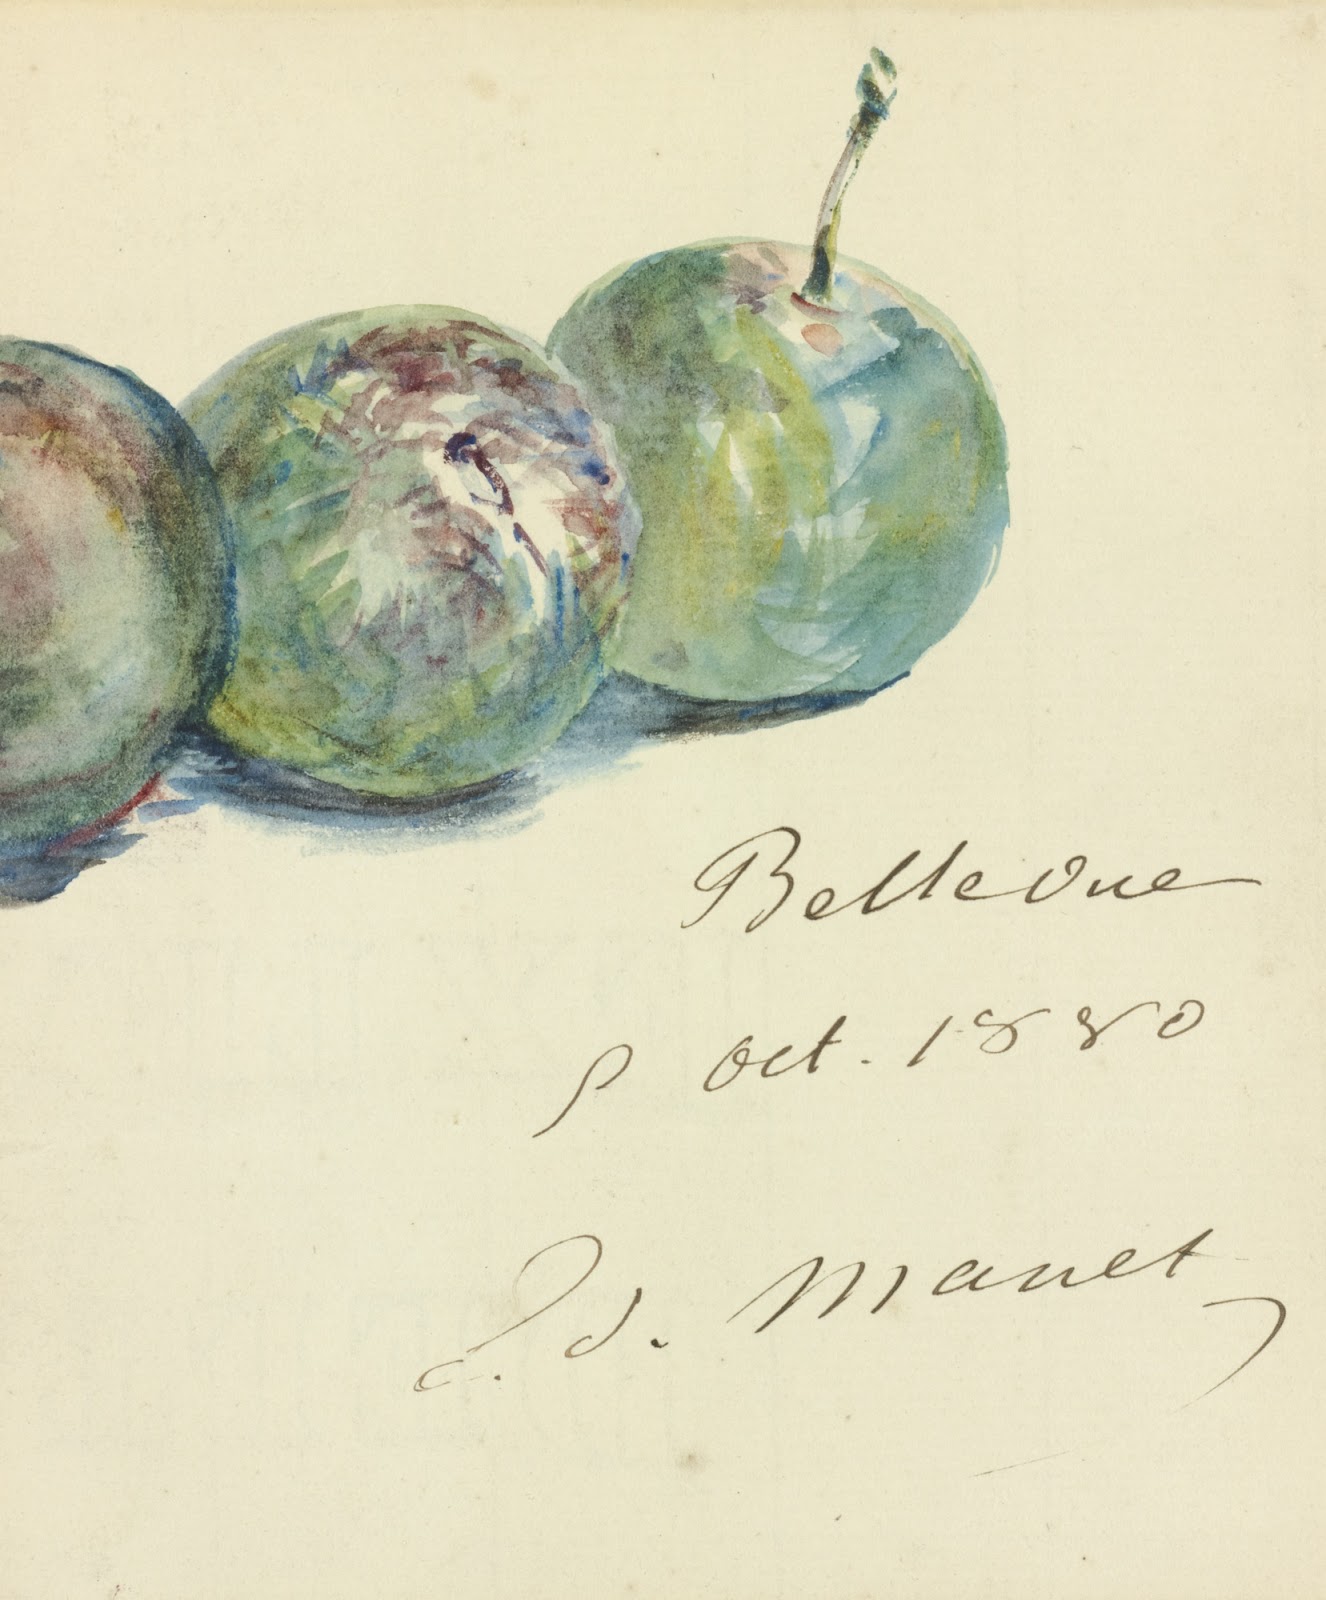 Edouard+Manet-1832-1883 (127).jpg